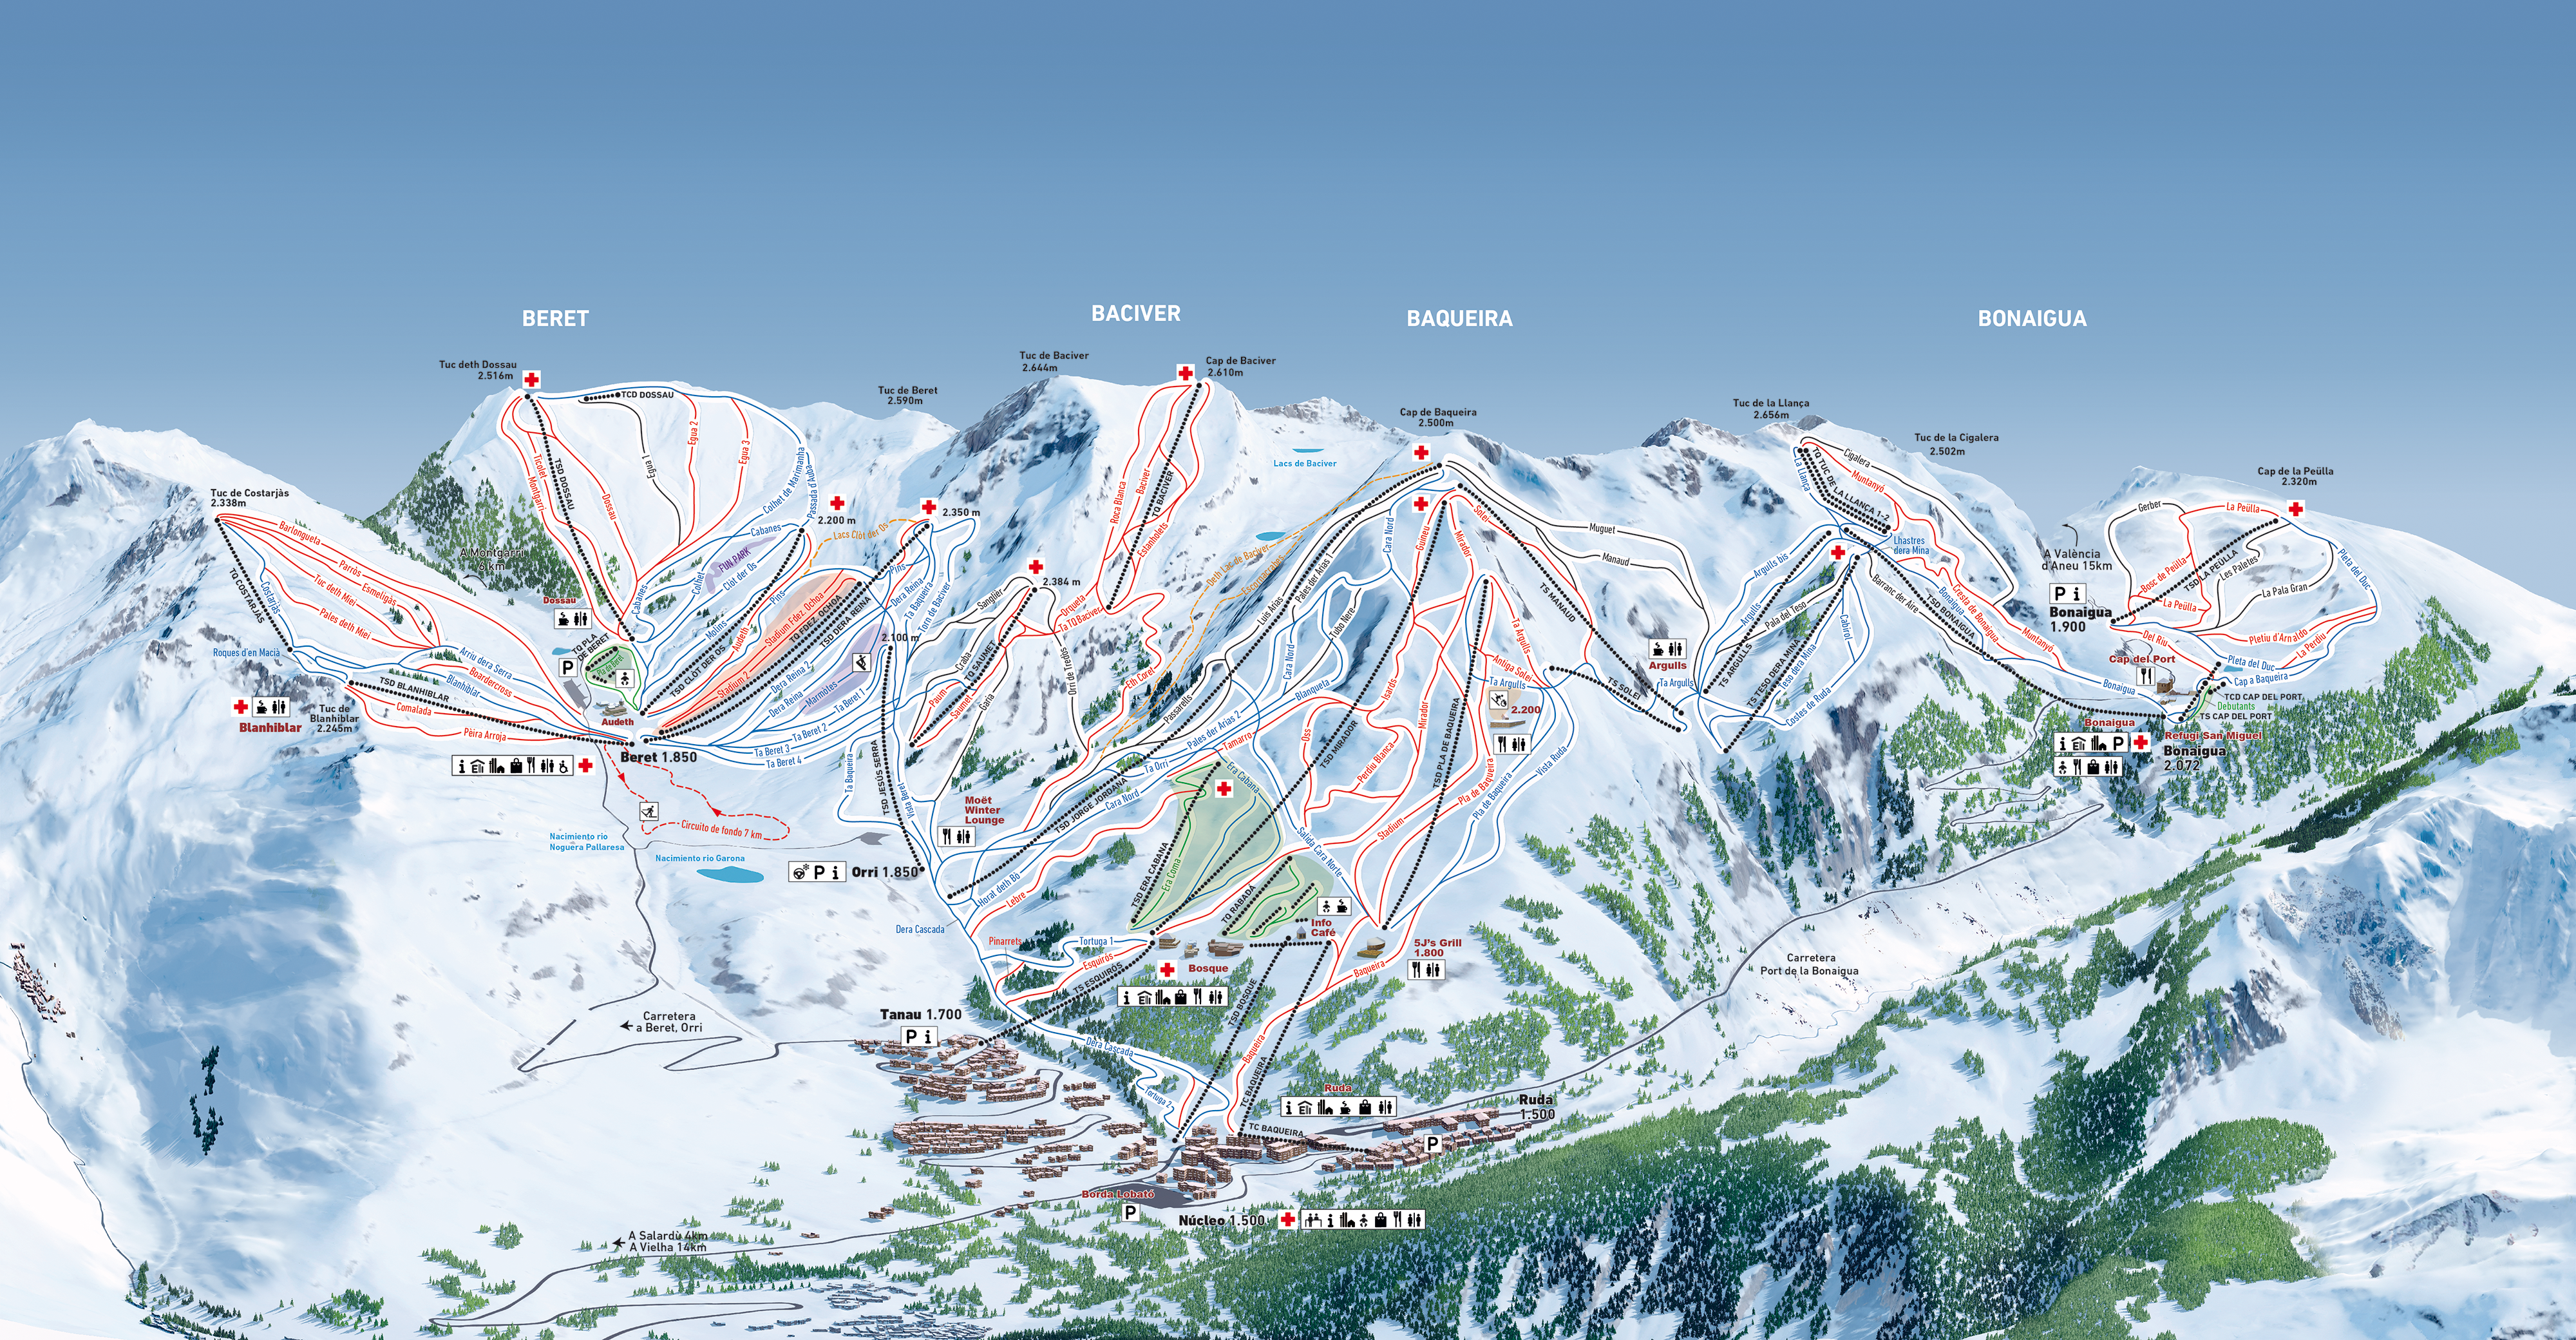 Baqueira Beret Ski Resort trail map